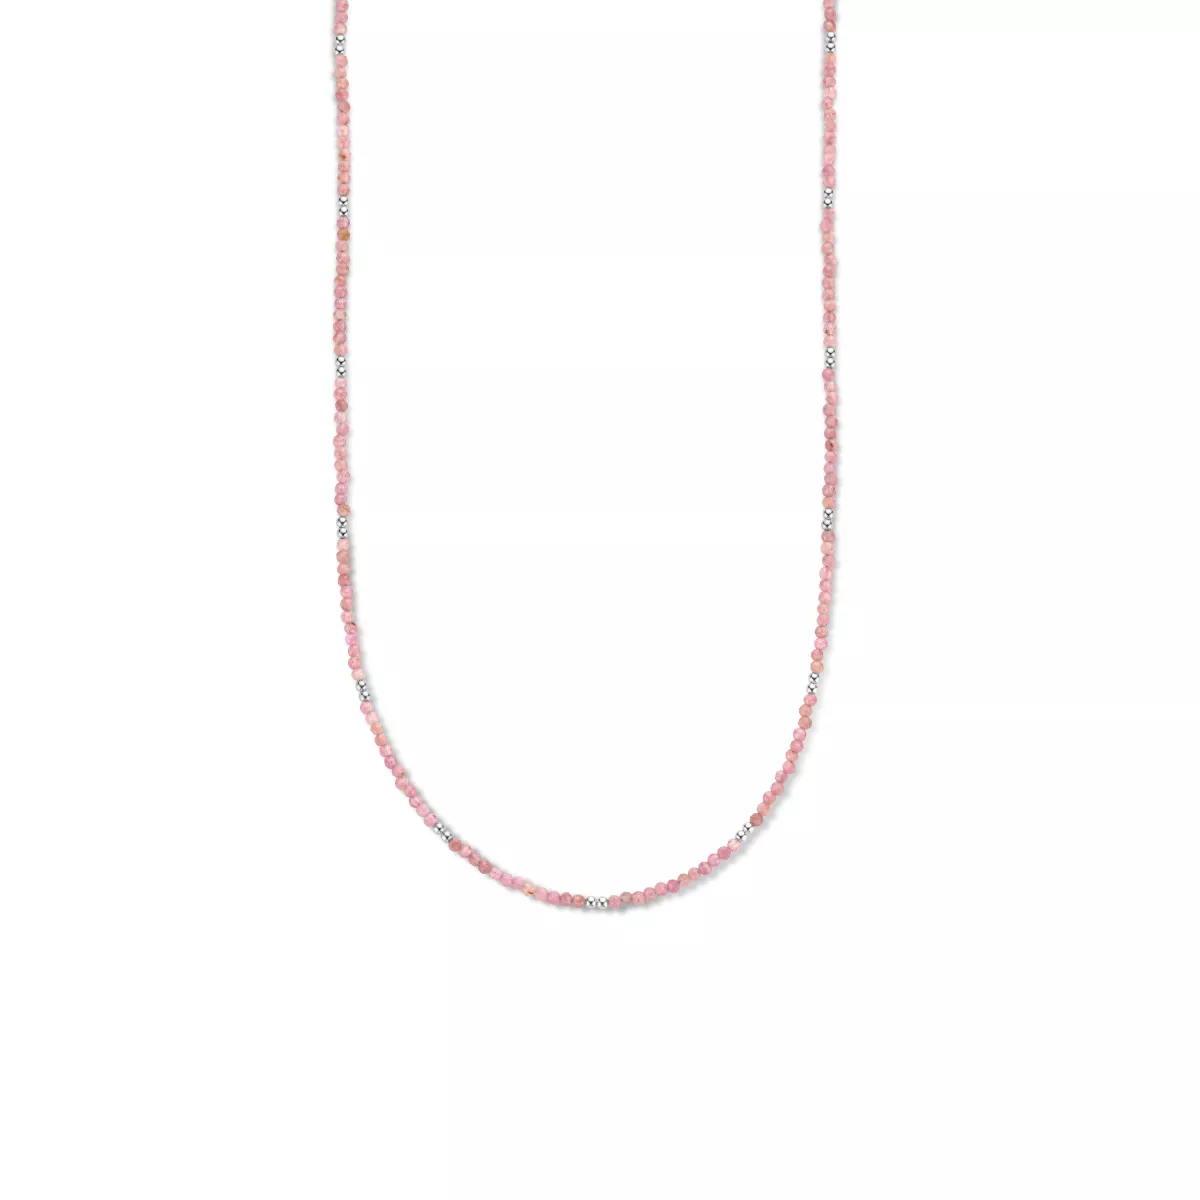 Ketting Bolletjes zilver-toermanlijn roze 2,2 mm 40-44 cm